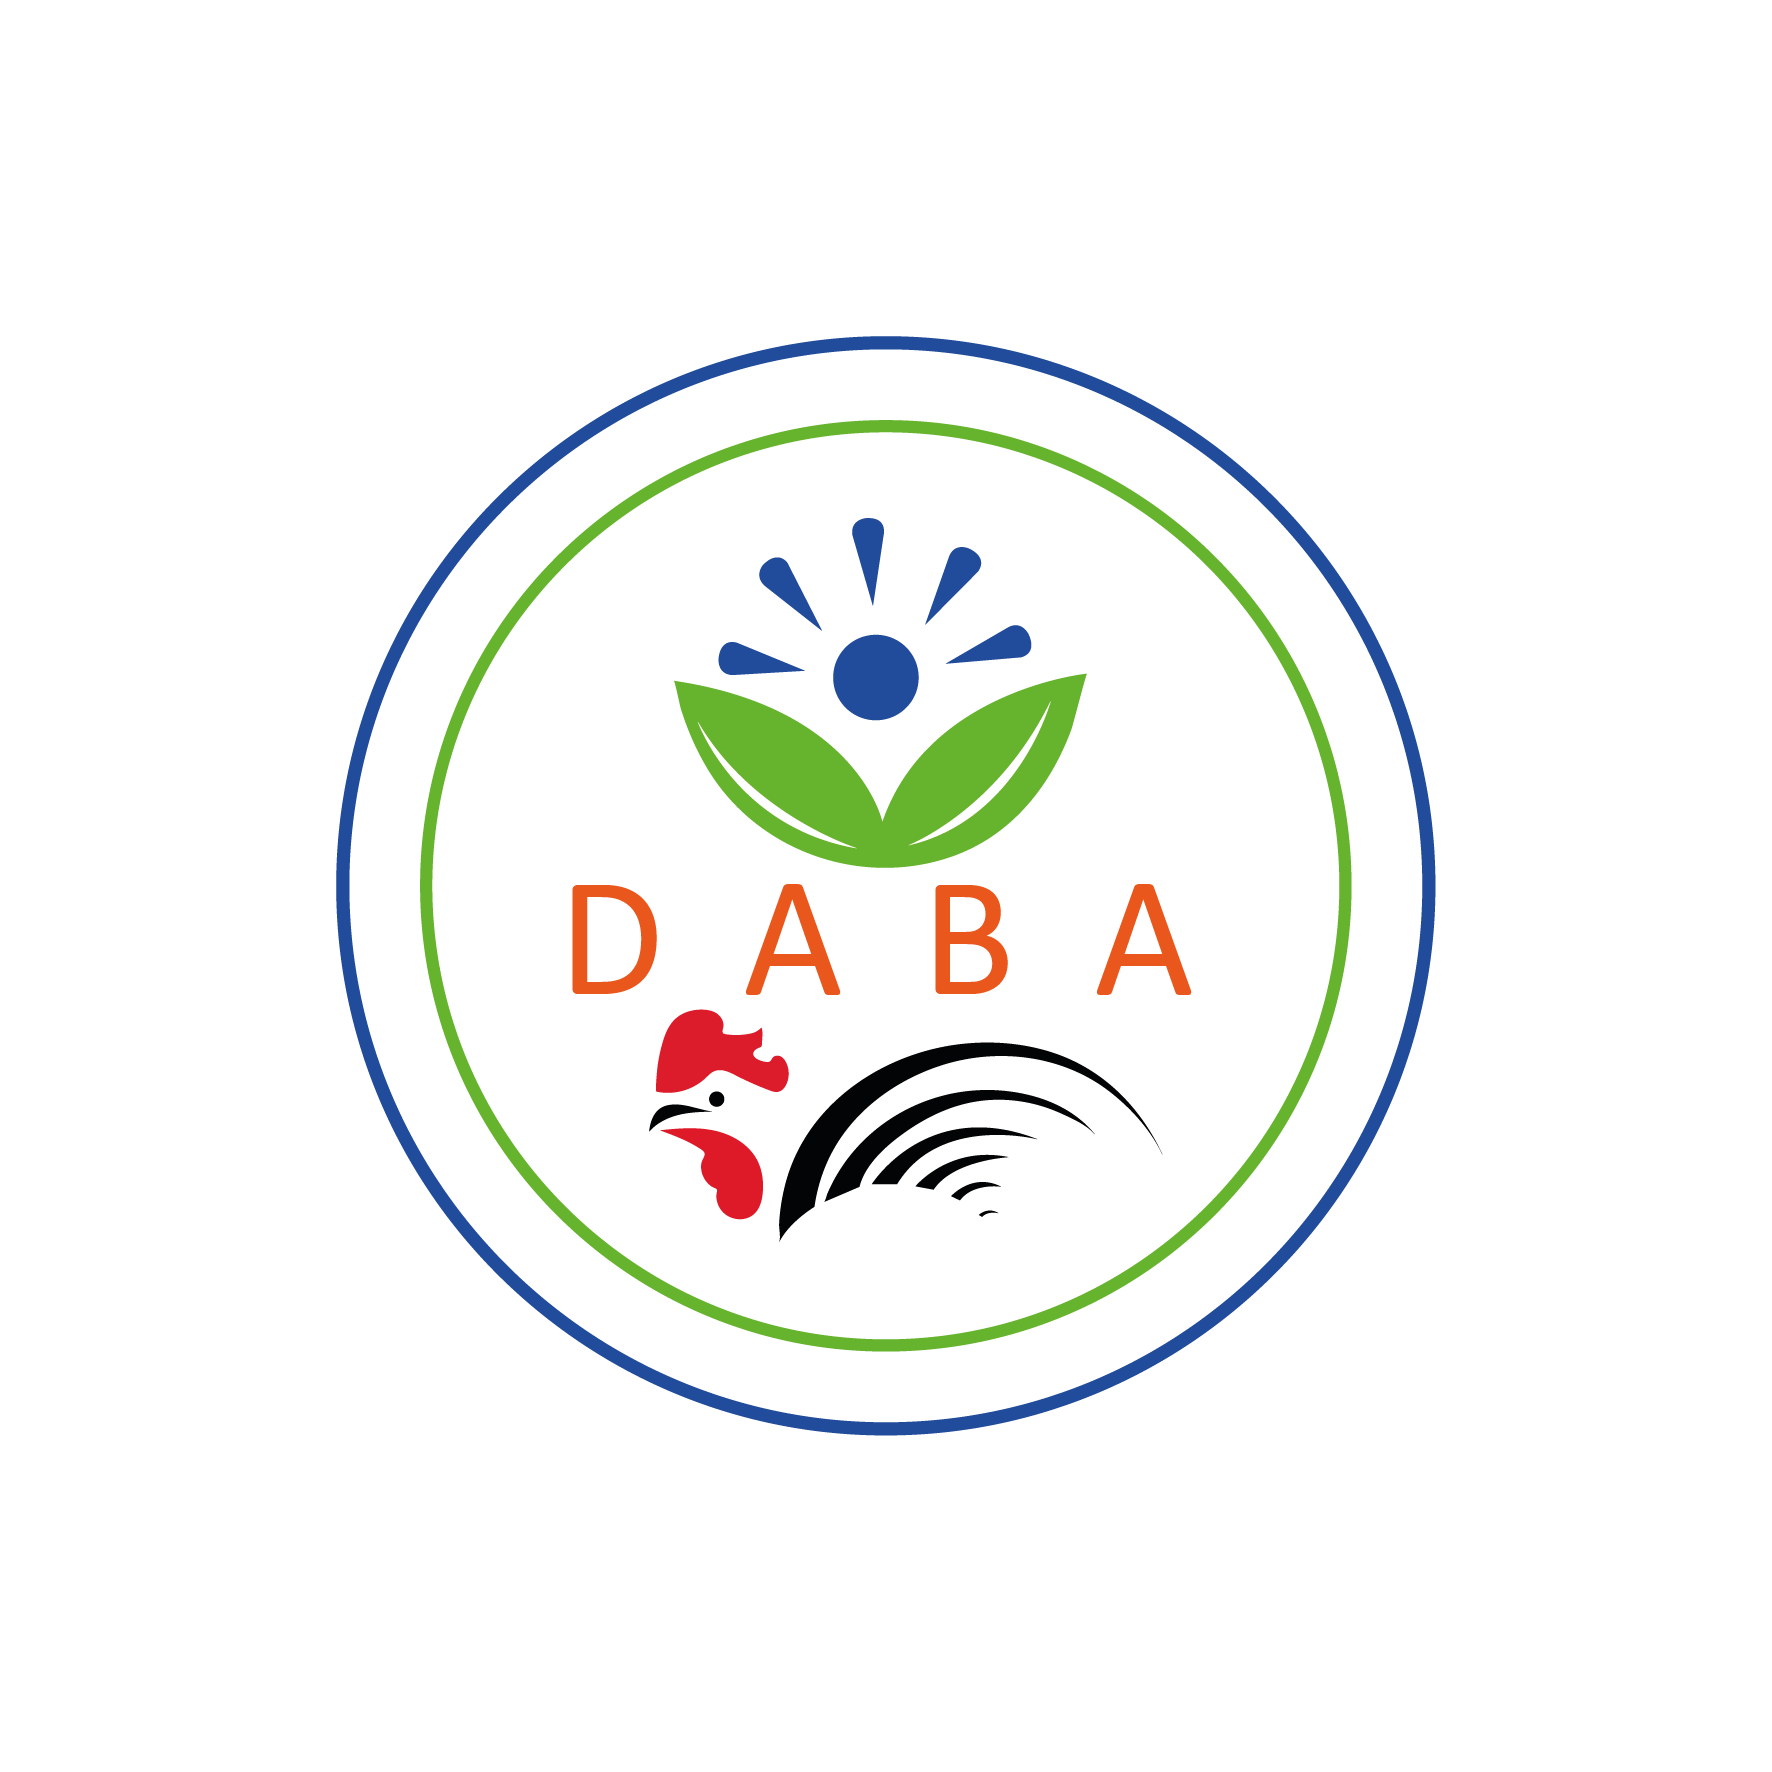 Daba logo